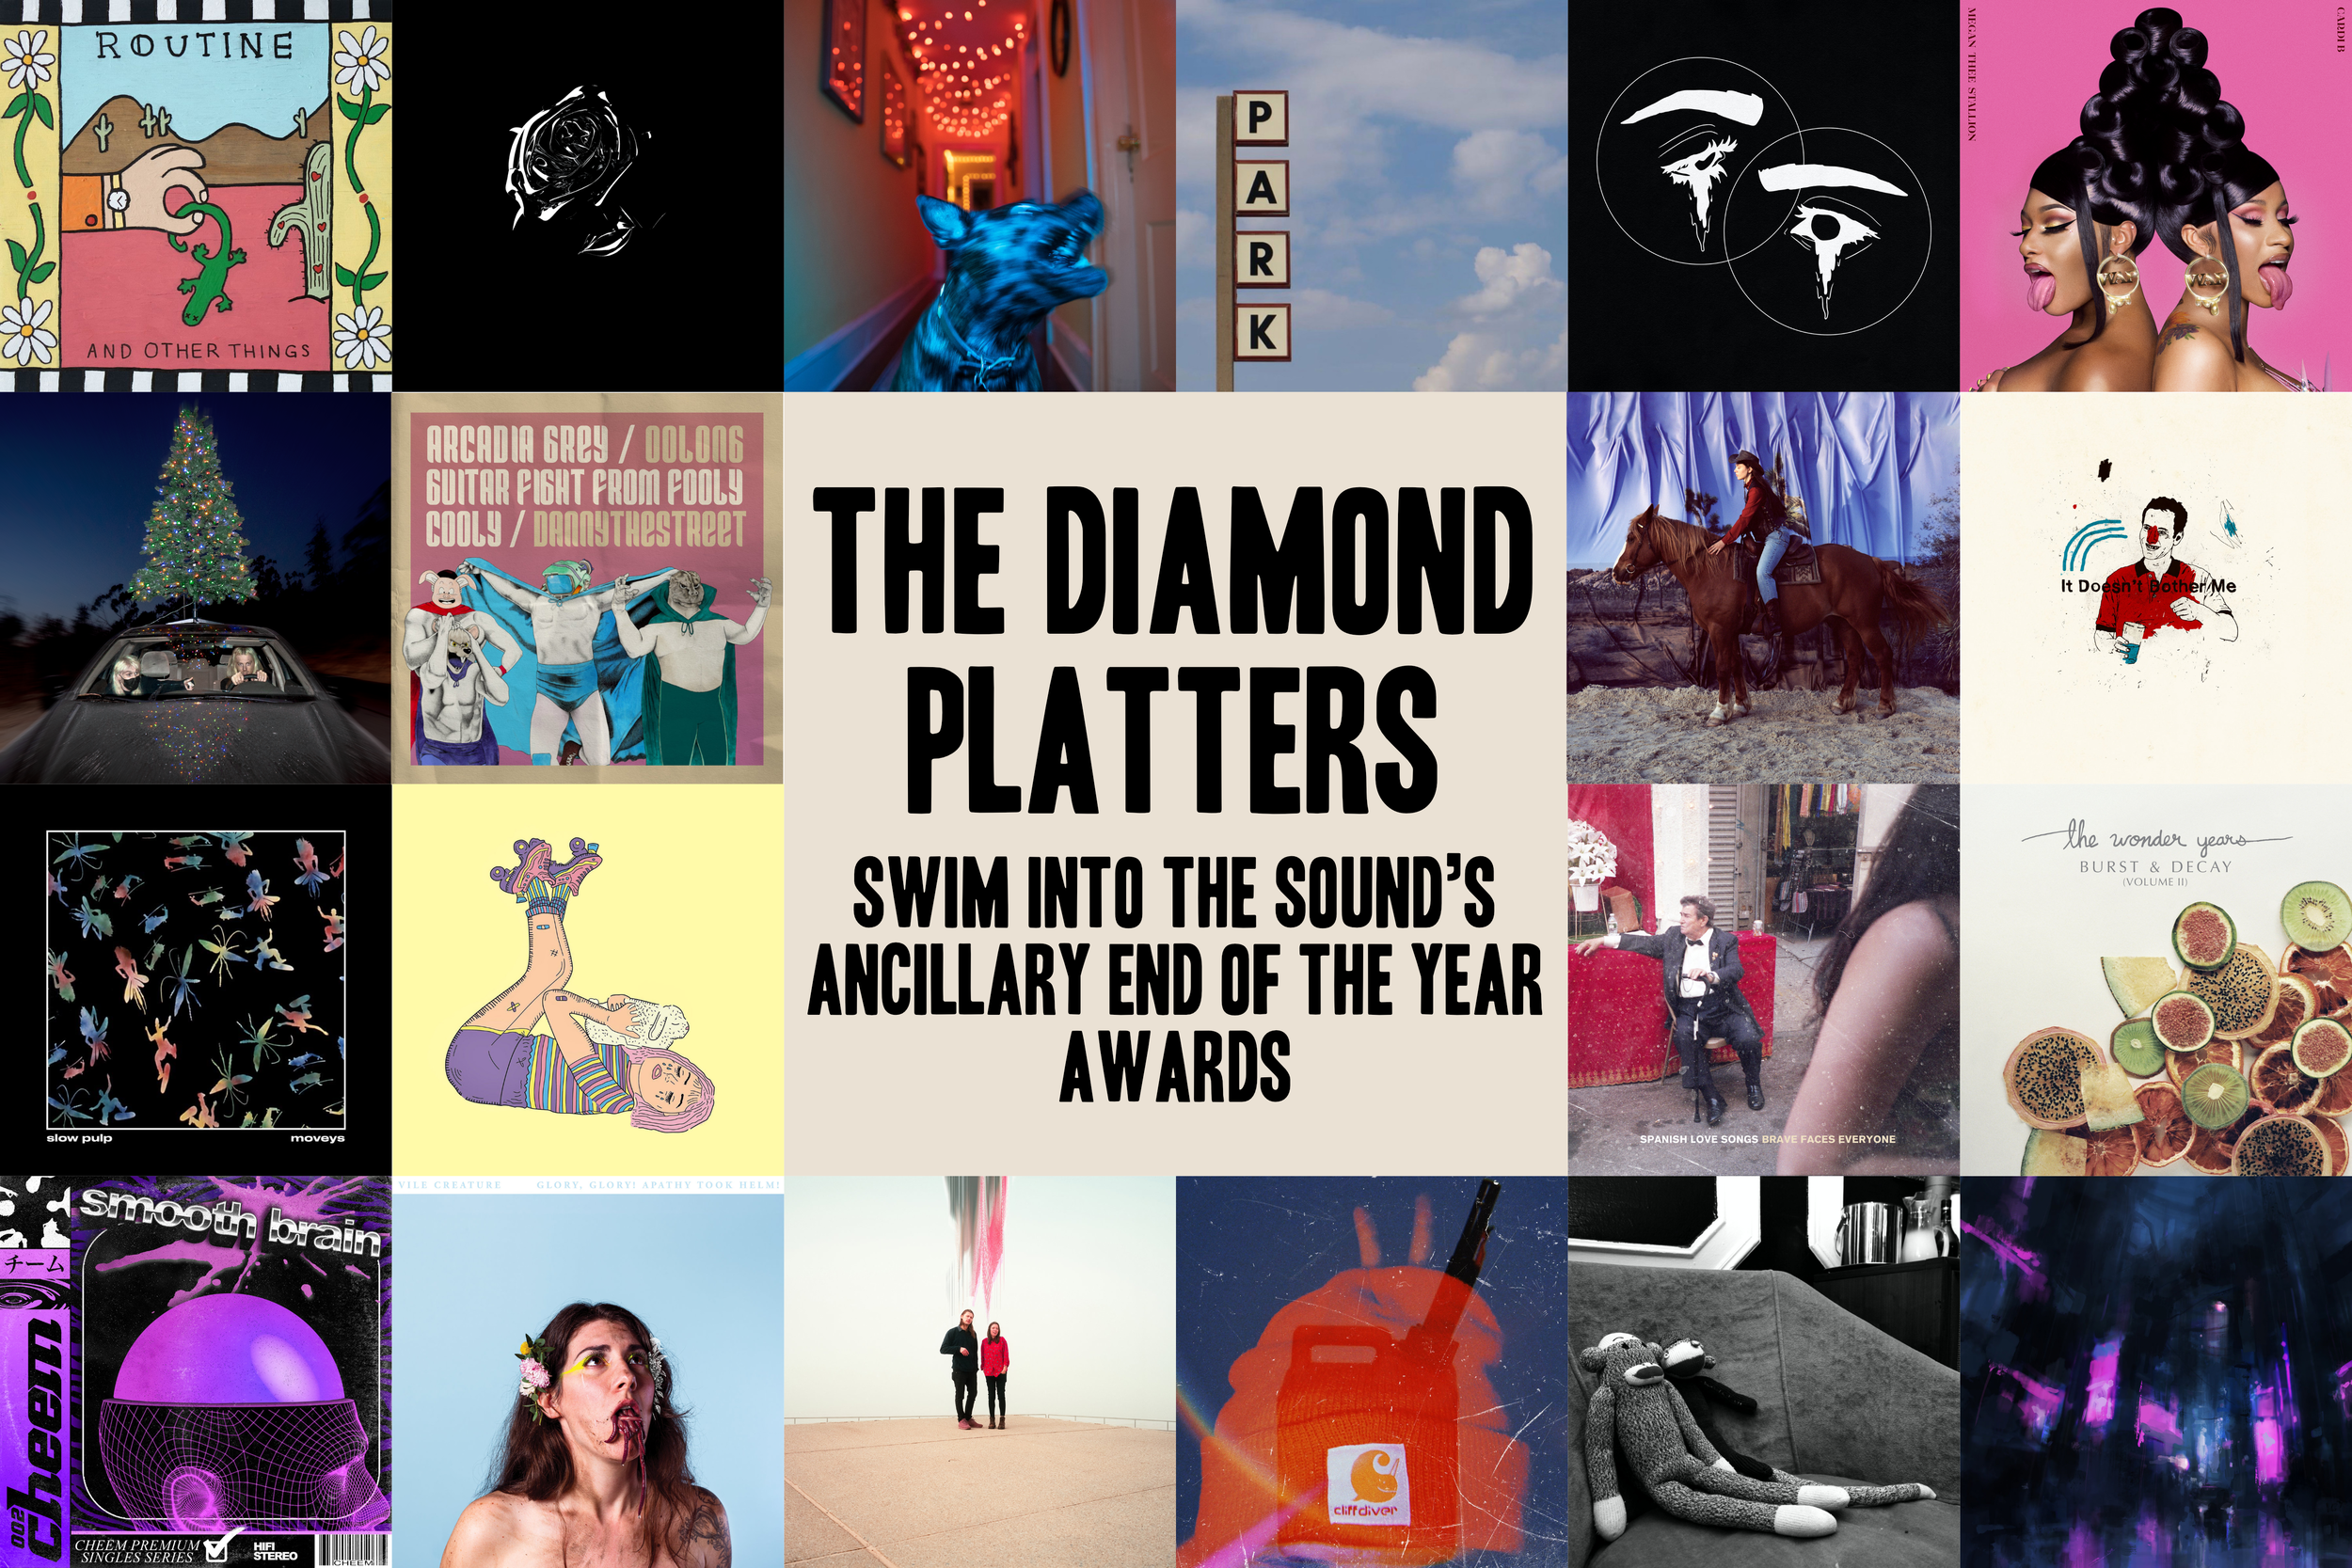 The 2020 Diamond Platters